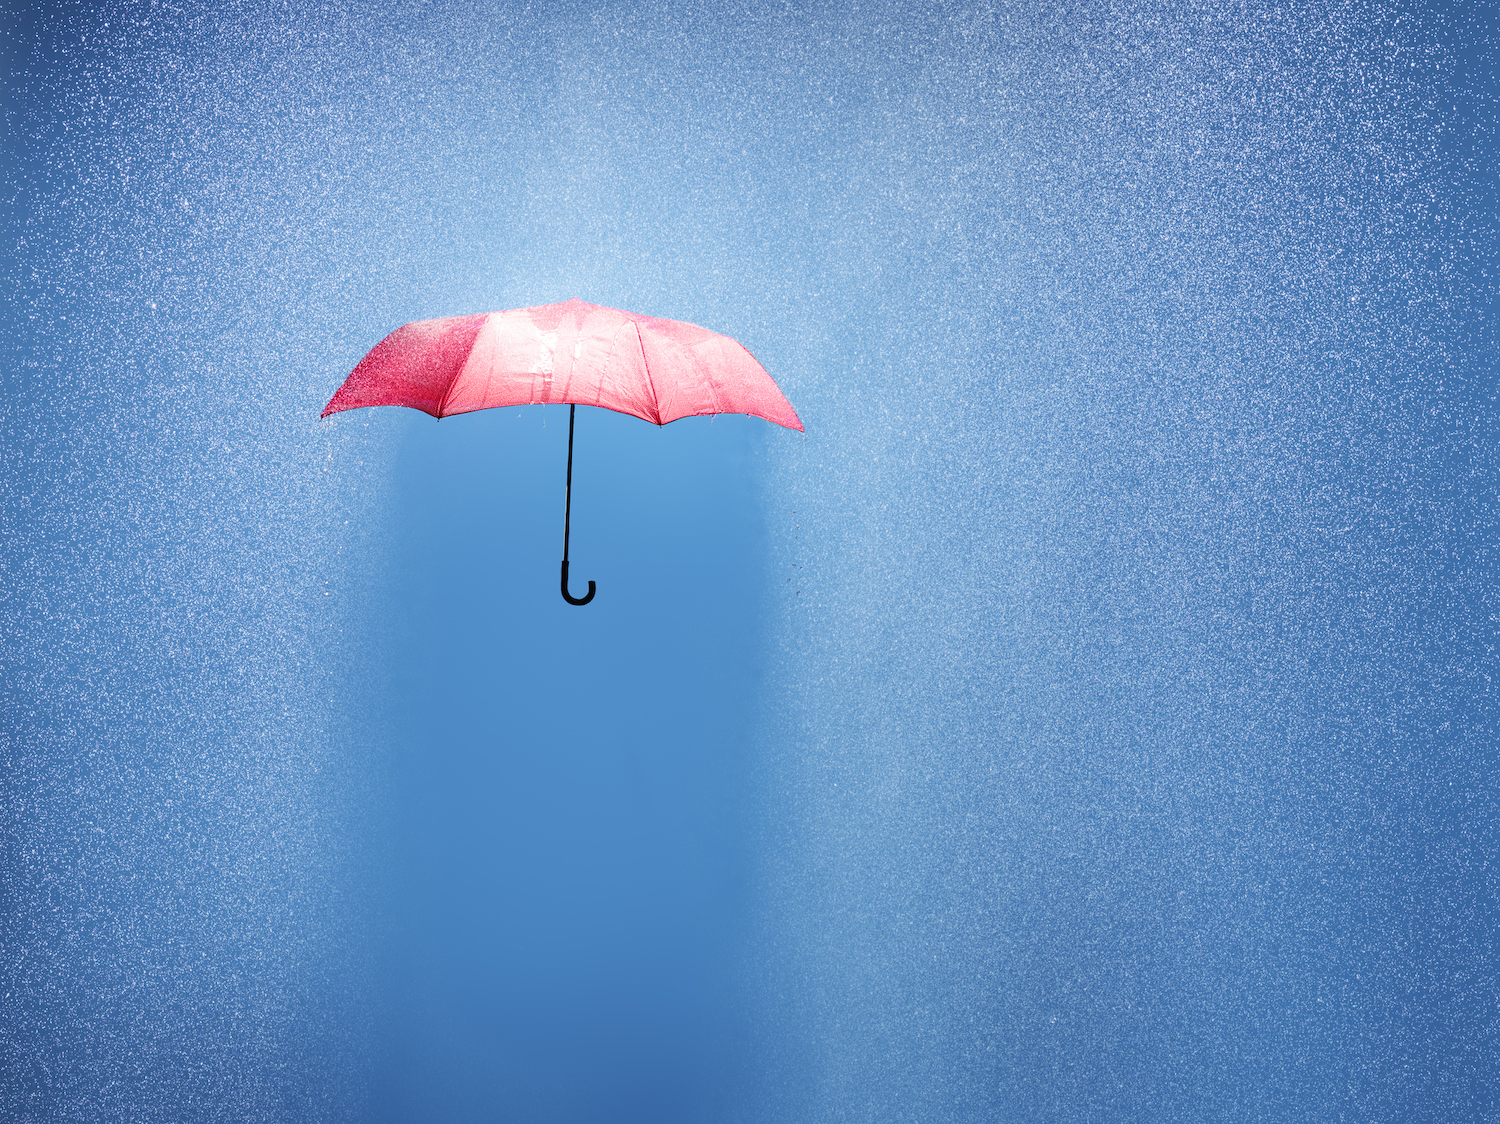 Pink umbrella in a rain shower, conceptual photography